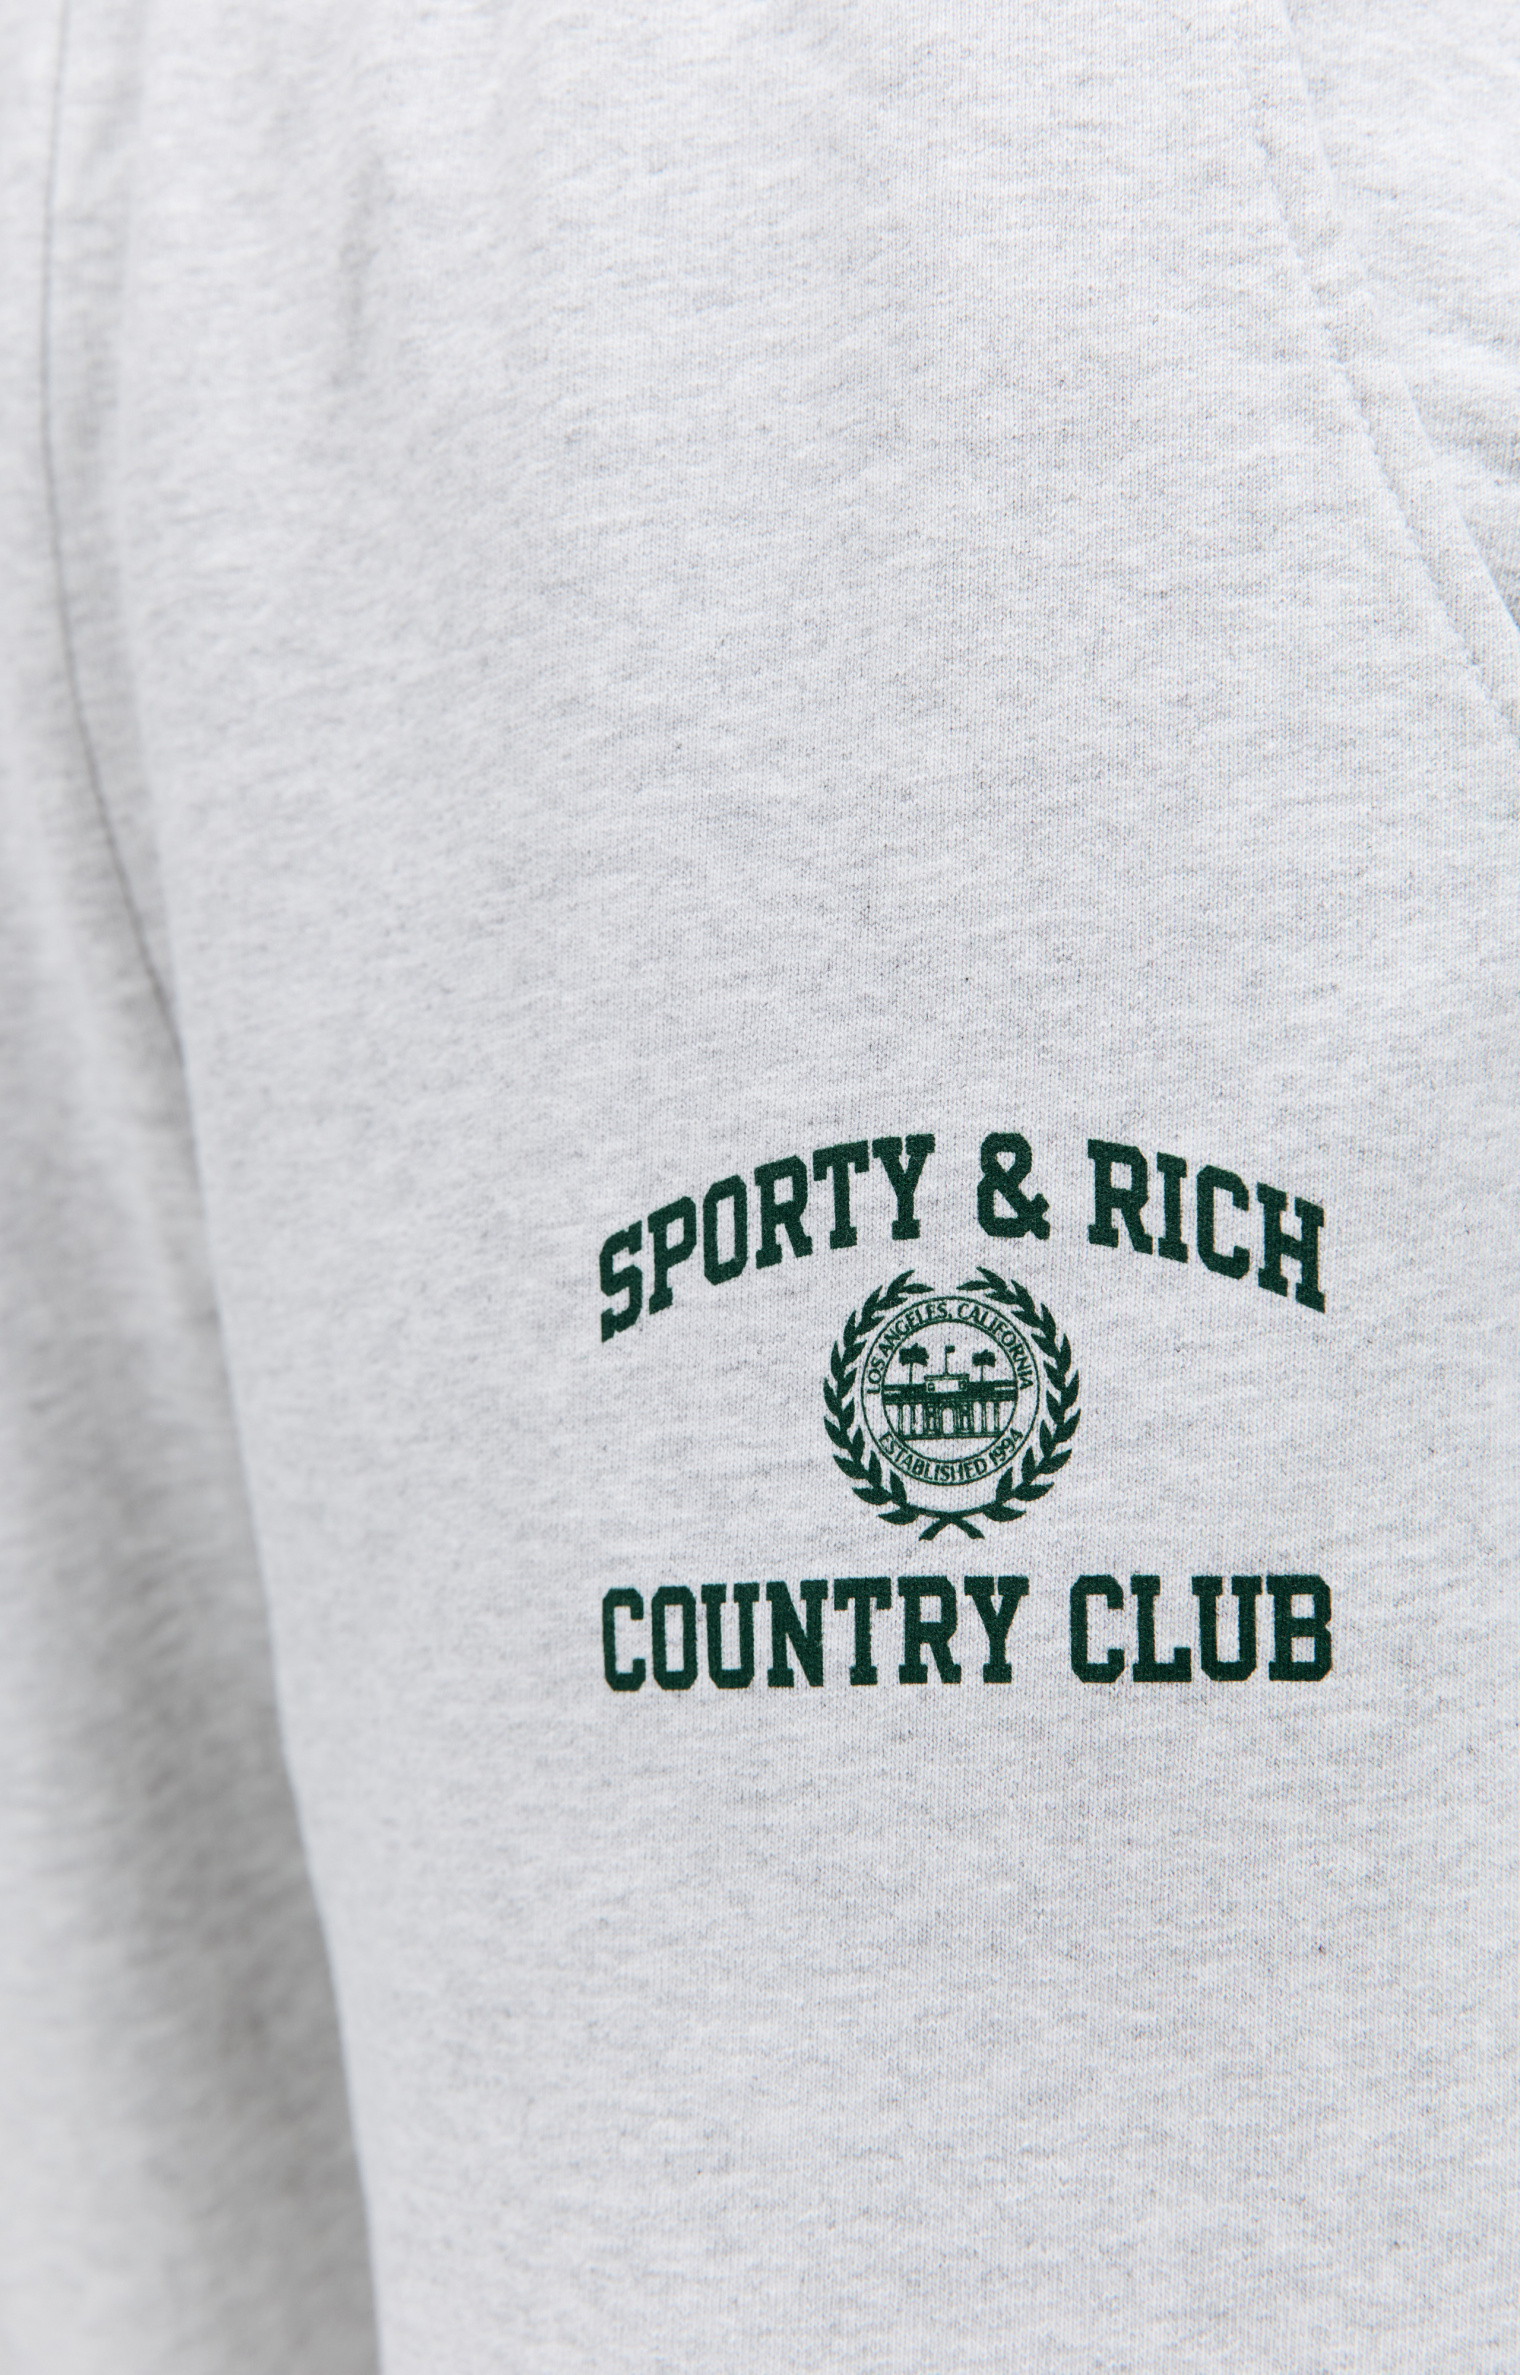 SPORTY & RICH Спортивные брюки Country Club